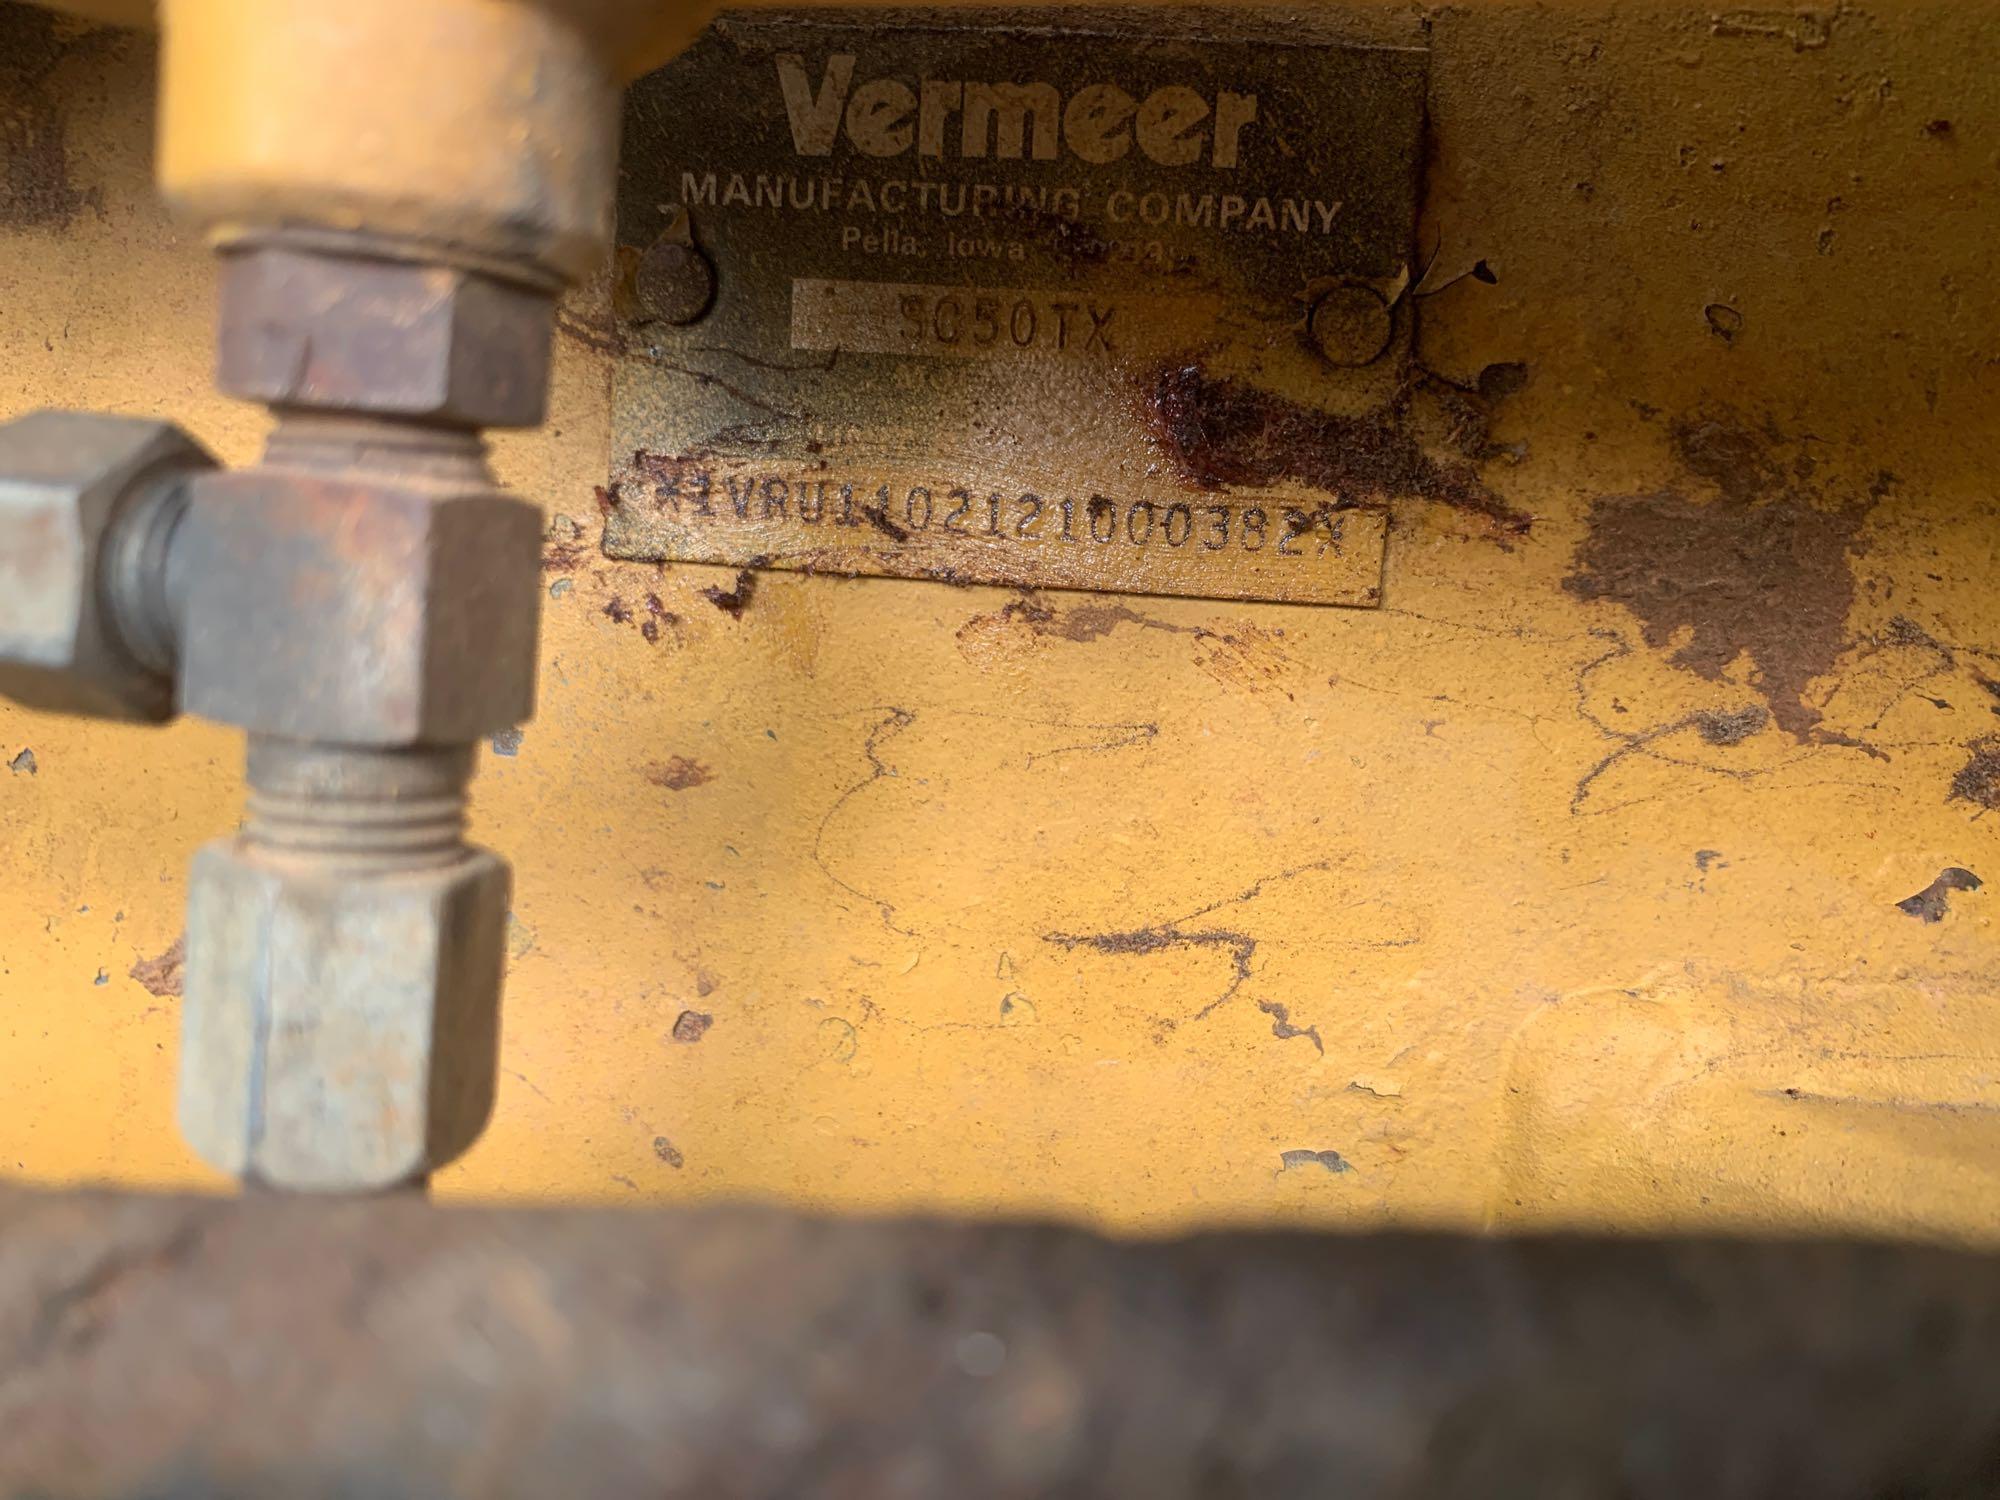 2005 Vermeer SC50TX Crawler Stump Grinder